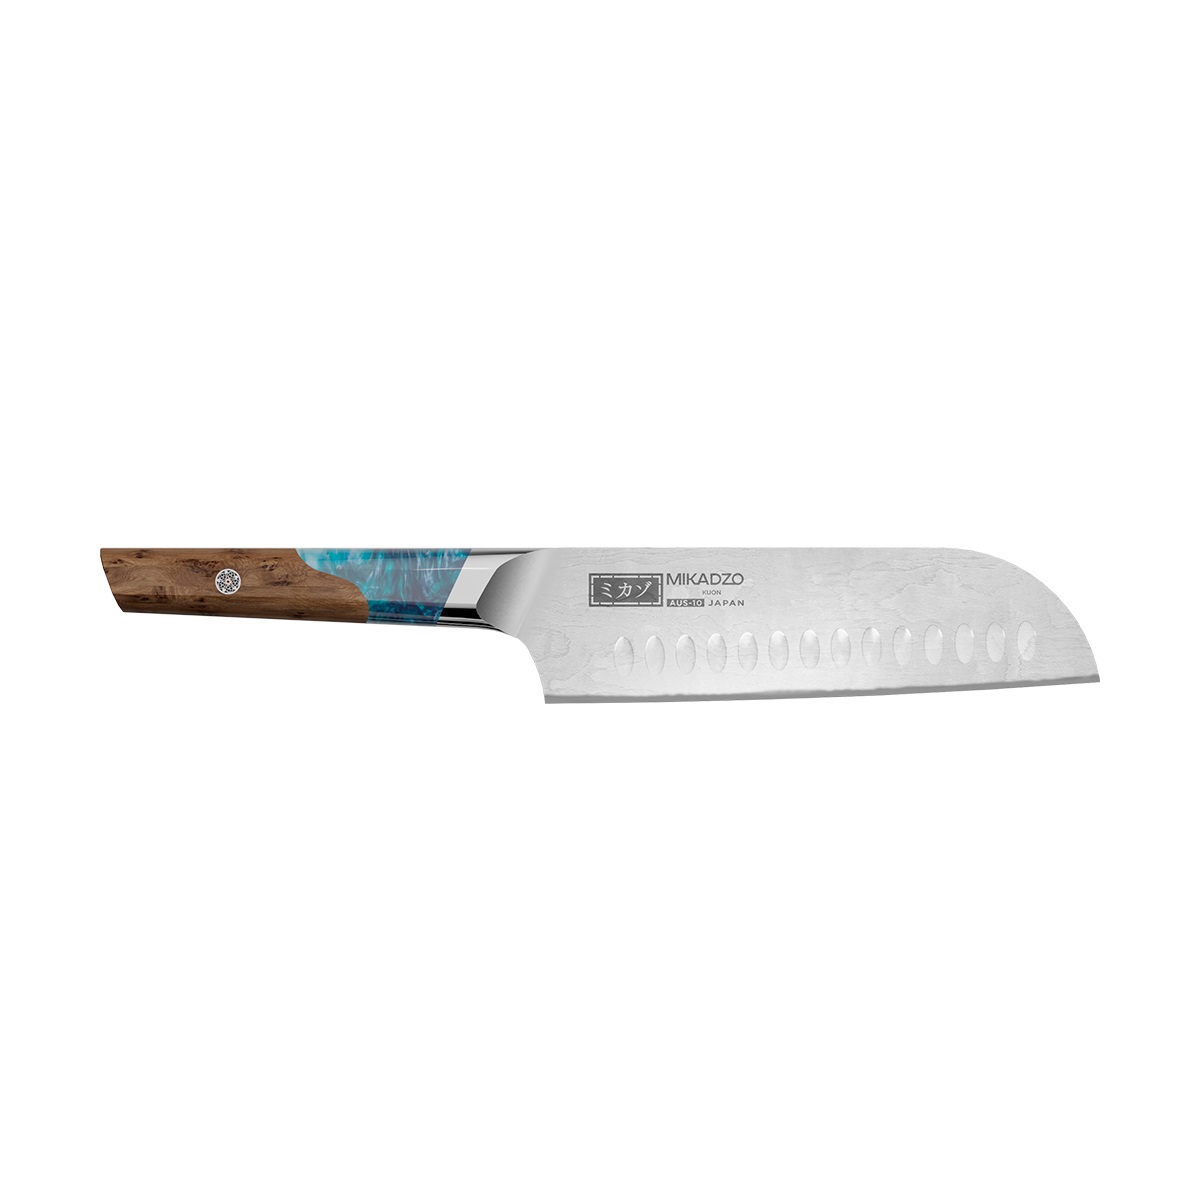 Кухонный нож Omoikiri Damascus Kuon 4992036 набор кухонных ножей omoikiri damascus kuon set 4992039 с подставкой